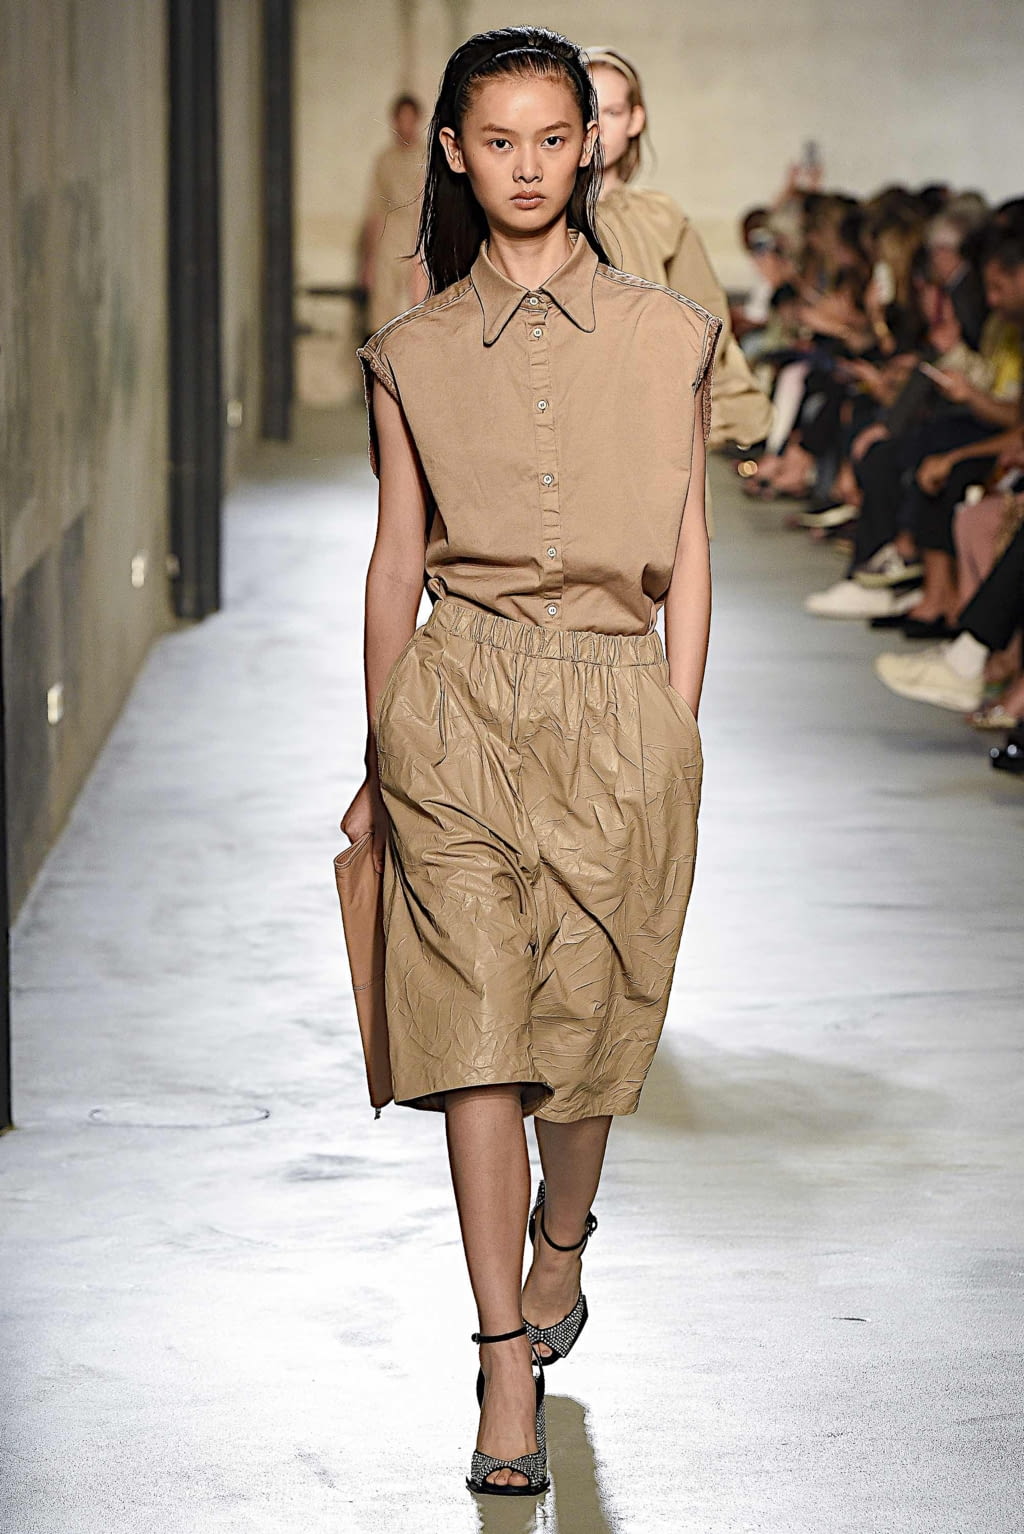 Brock Collection SS20 womenswear #24 - Tagwalk: The Fashion Search